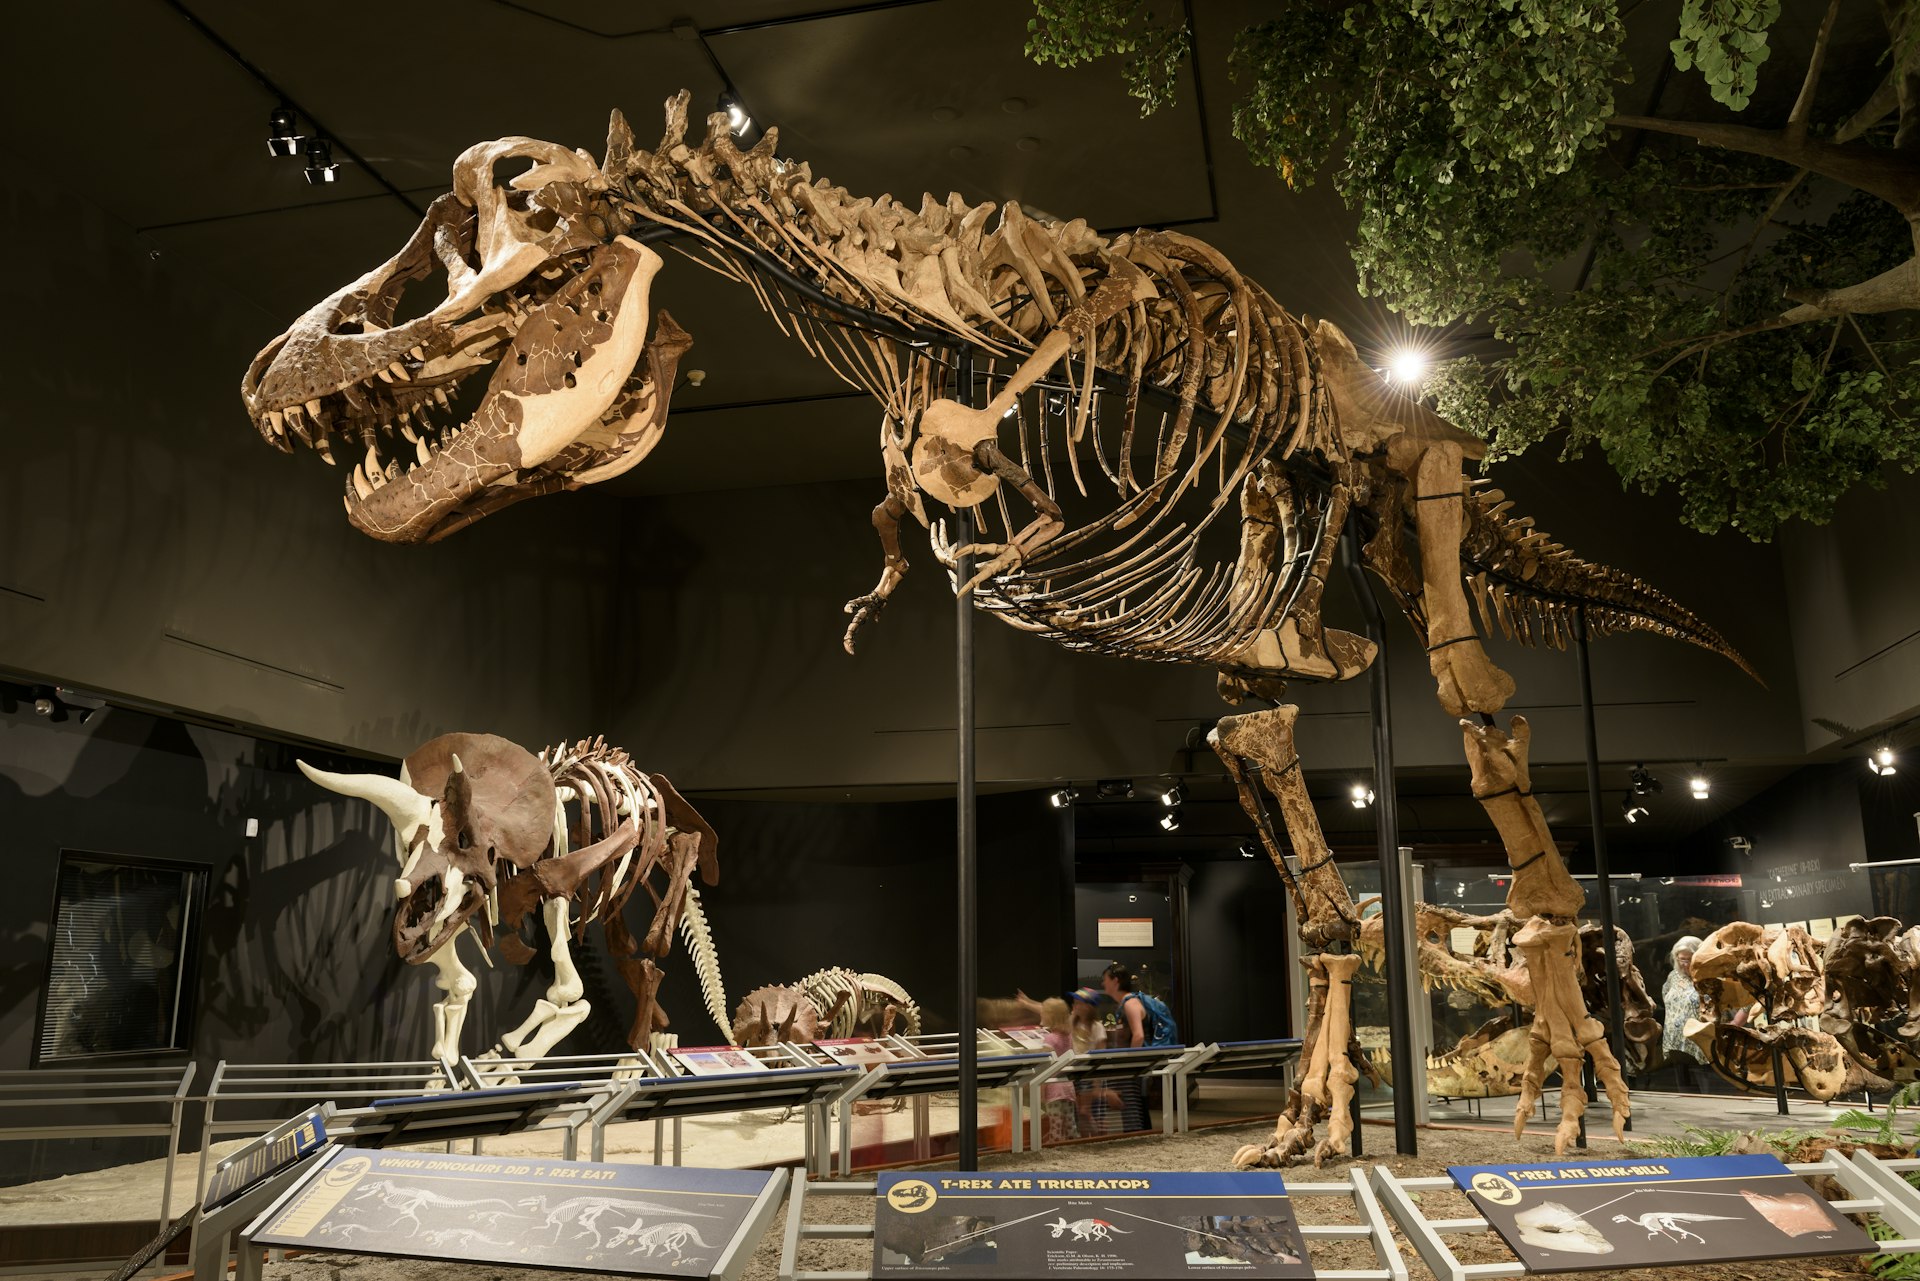 Dinosaur skeletons on display at the Museum of the Rockies